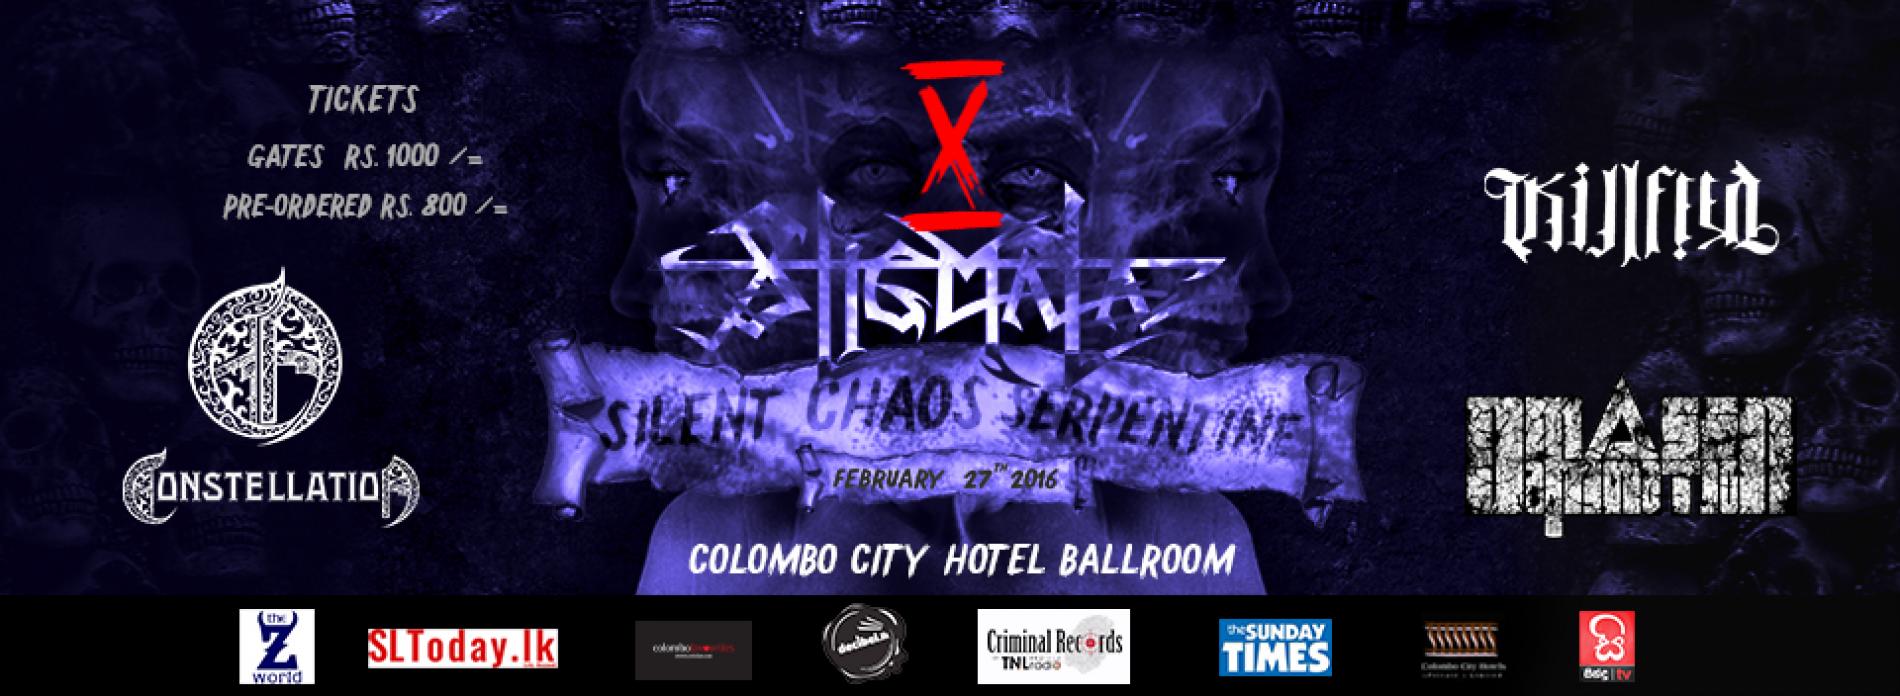 Stigmata Live : SILENT CHAOS SERPENTINE 10 Year Anniversary Concert